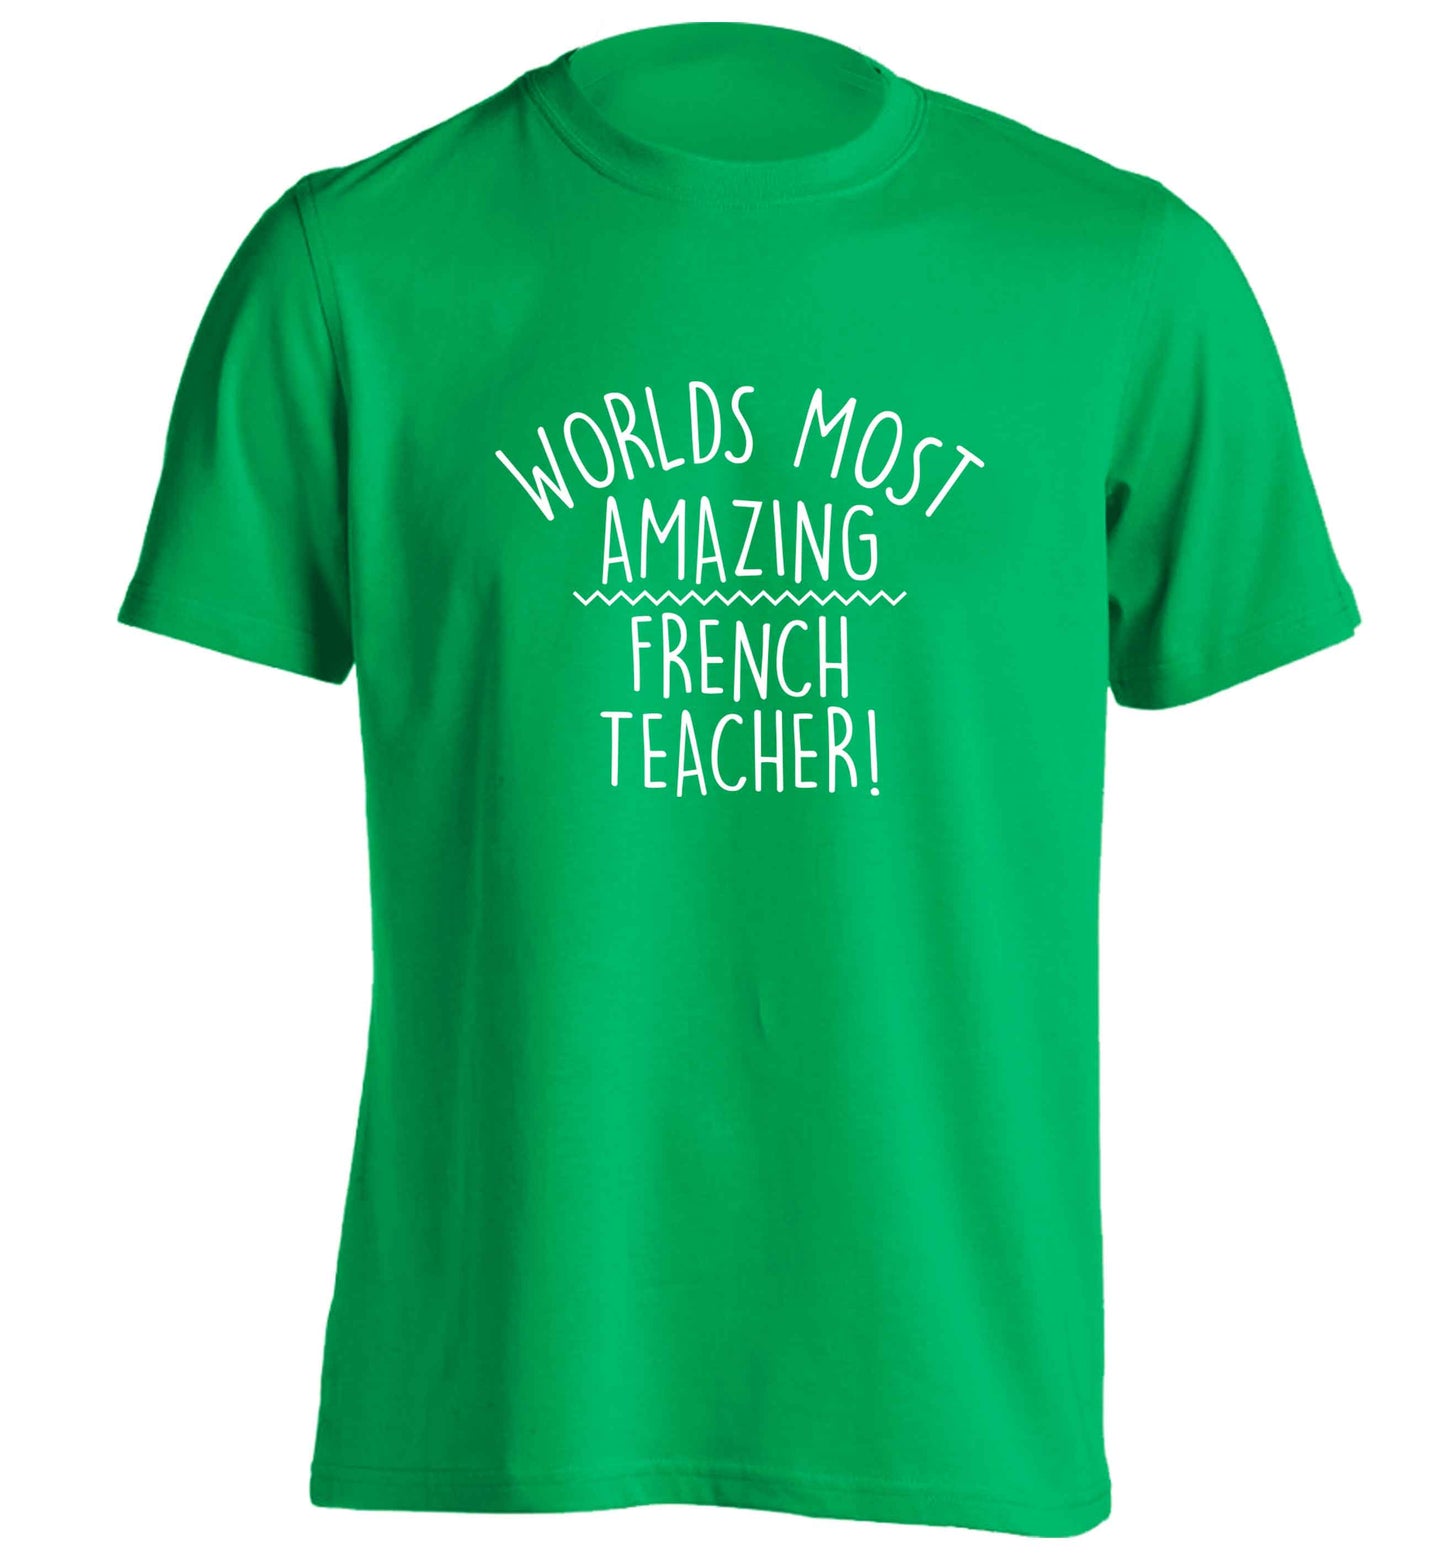 Worlds most amazing French teacher adults unisex green Tshirt 2XL